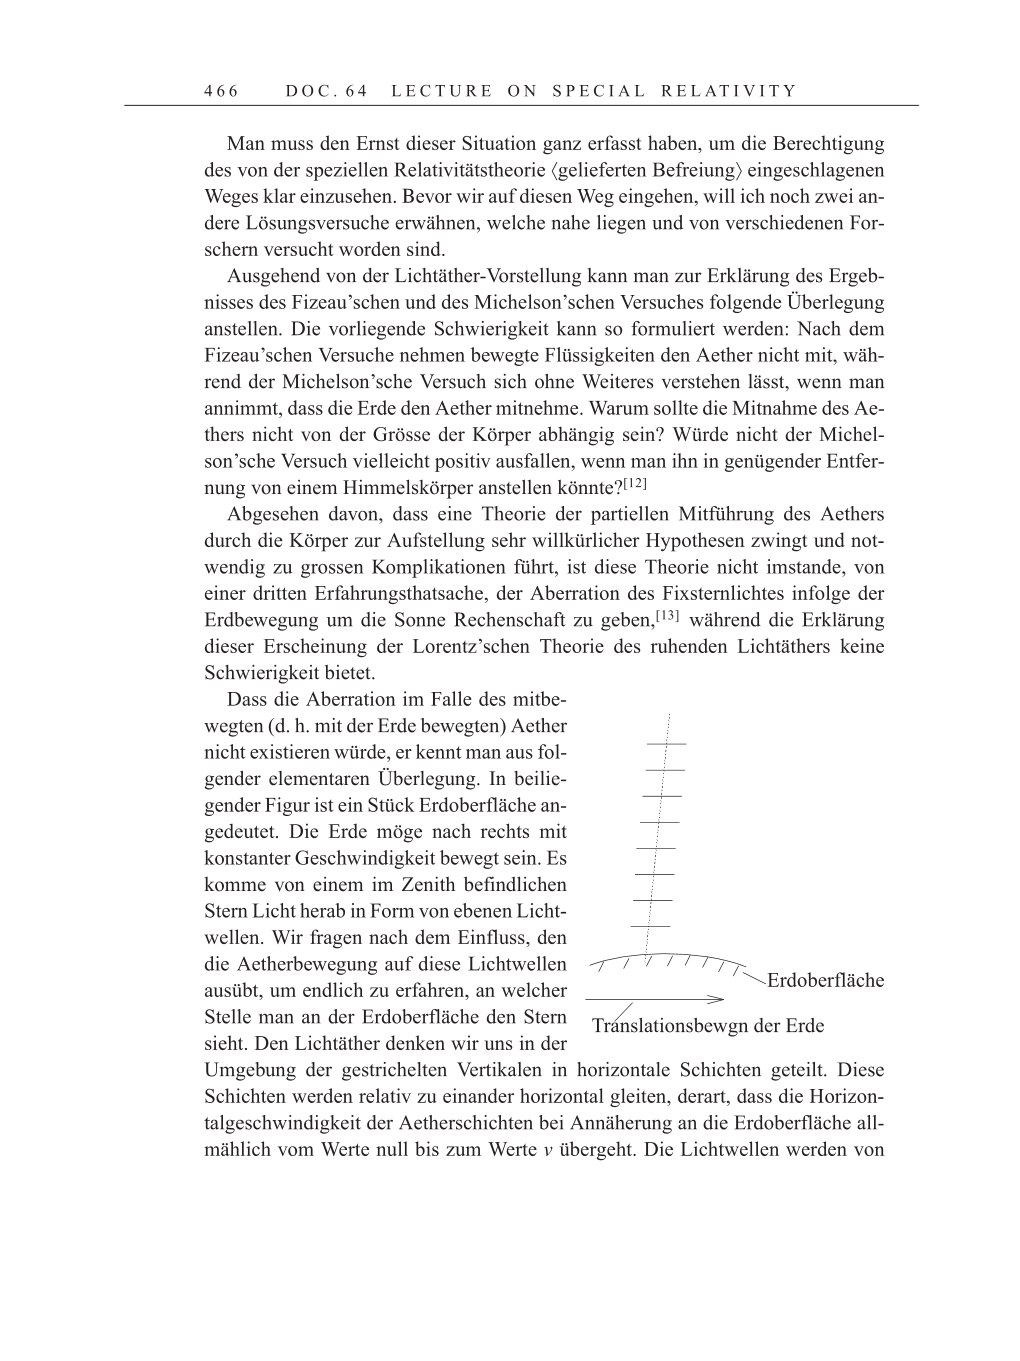 Volume 7: The Berlin Years: Writings, 1918-1921 page 466